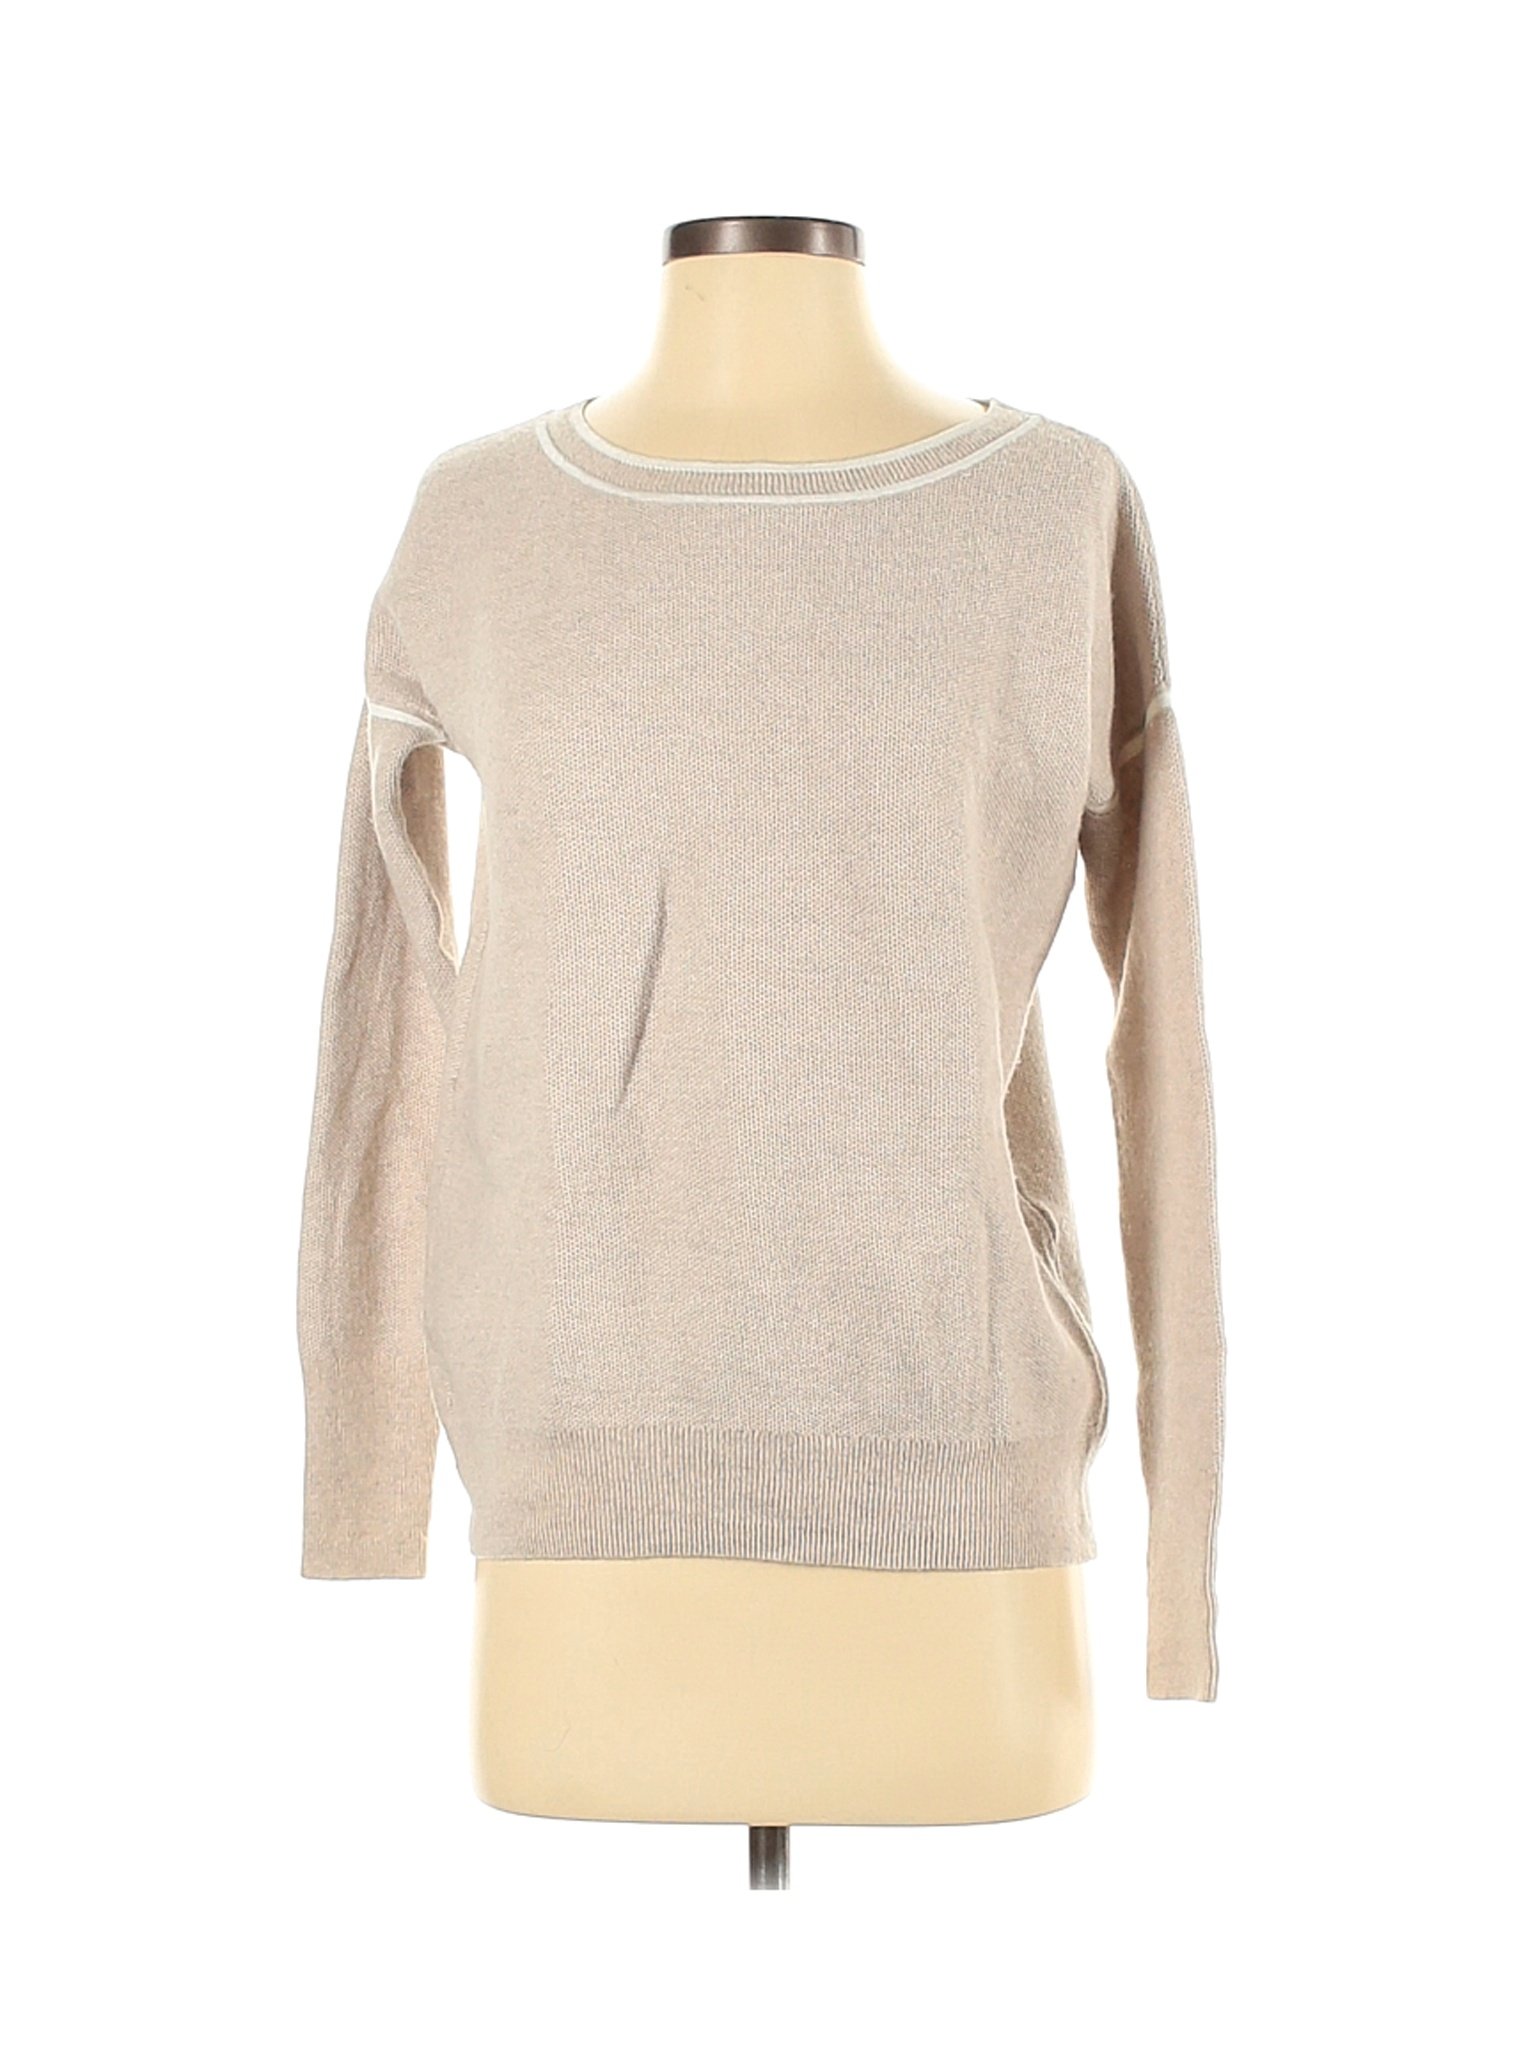 Banana Republic Filpucci Women Brown Pullover Sweater S | eBay